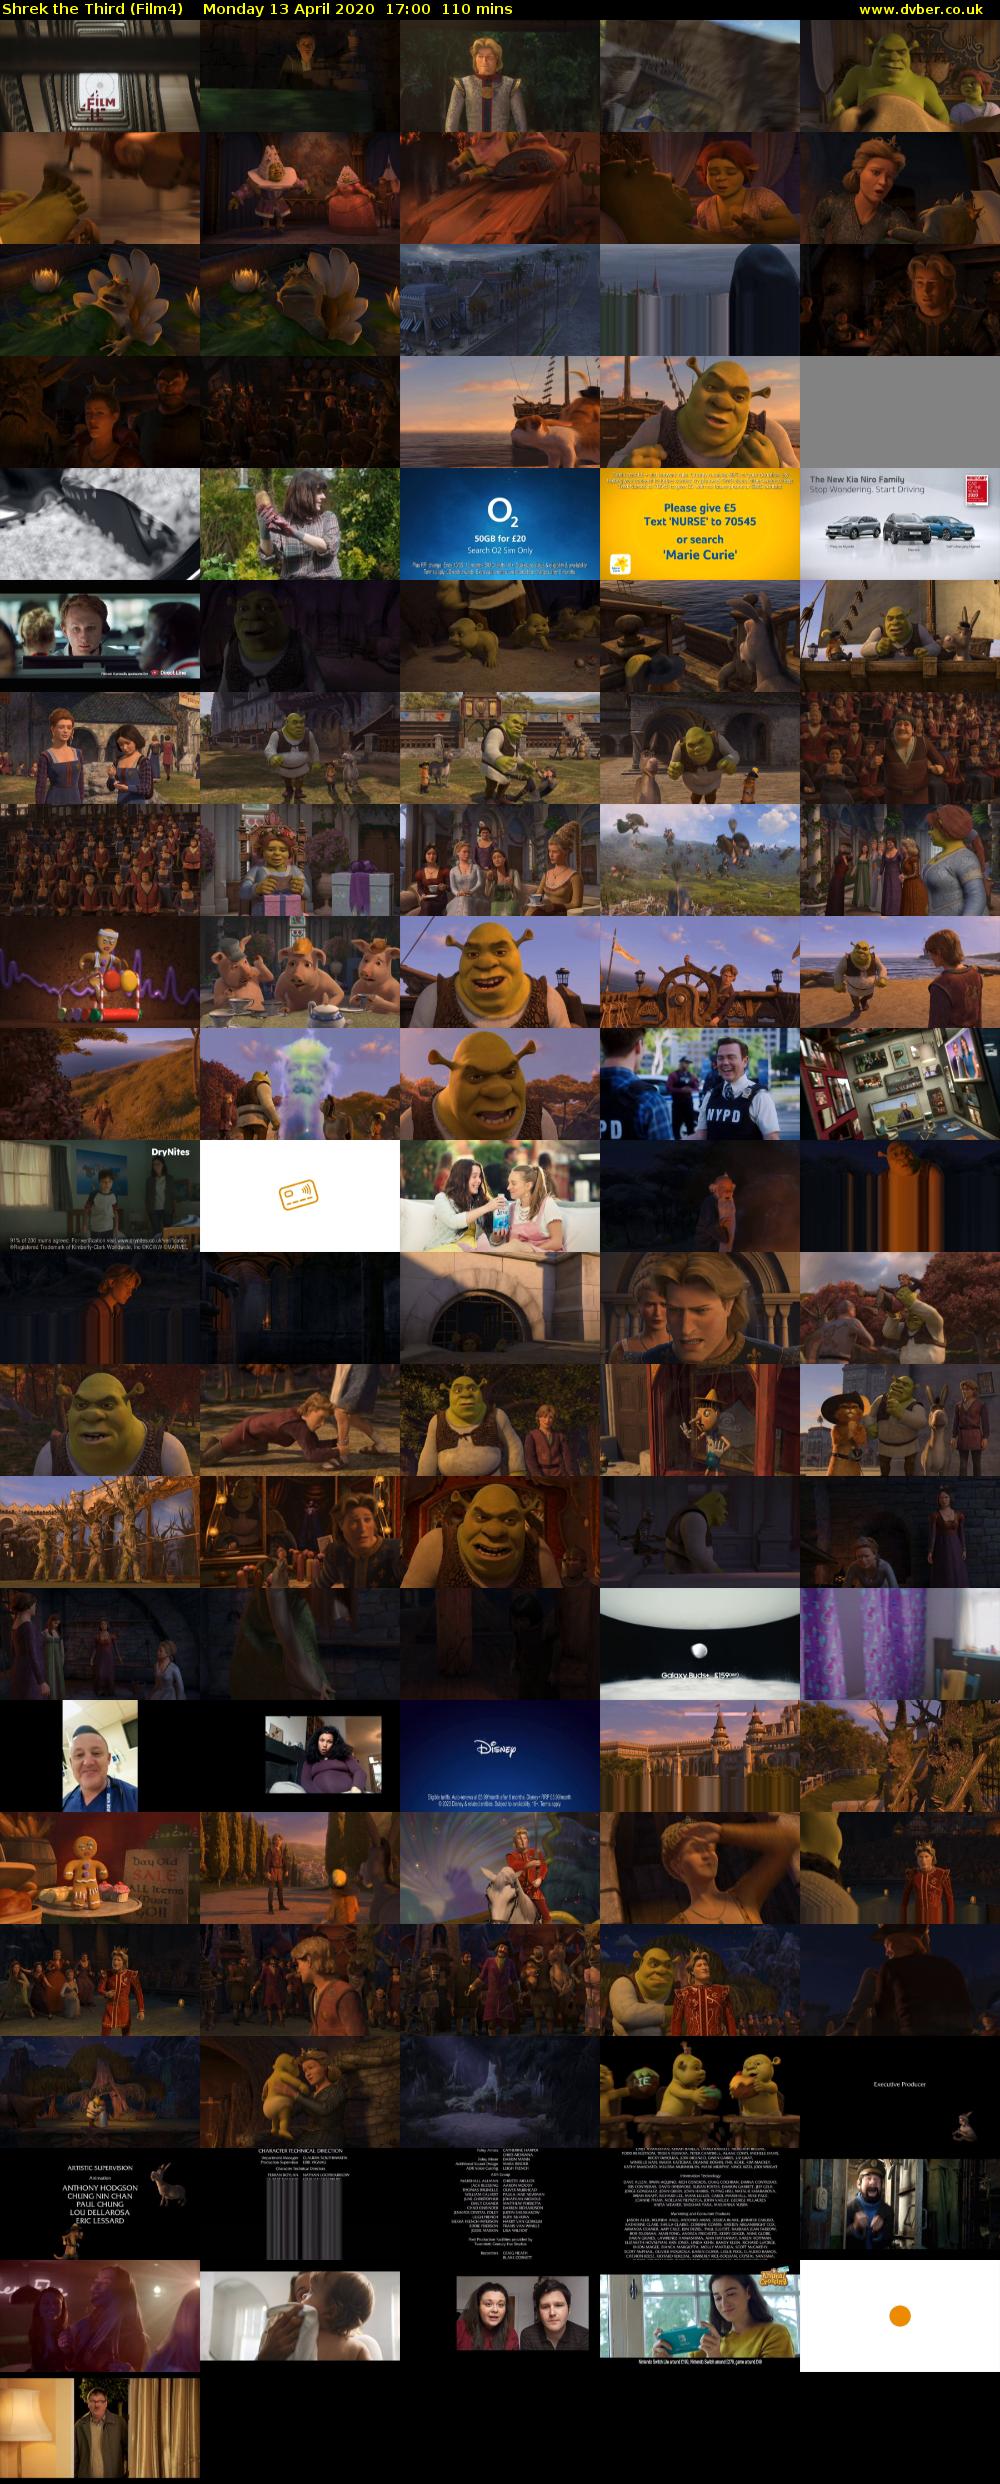 Shrek the Third (Film4) Monday 13 April 2020 17:00 - 18:50